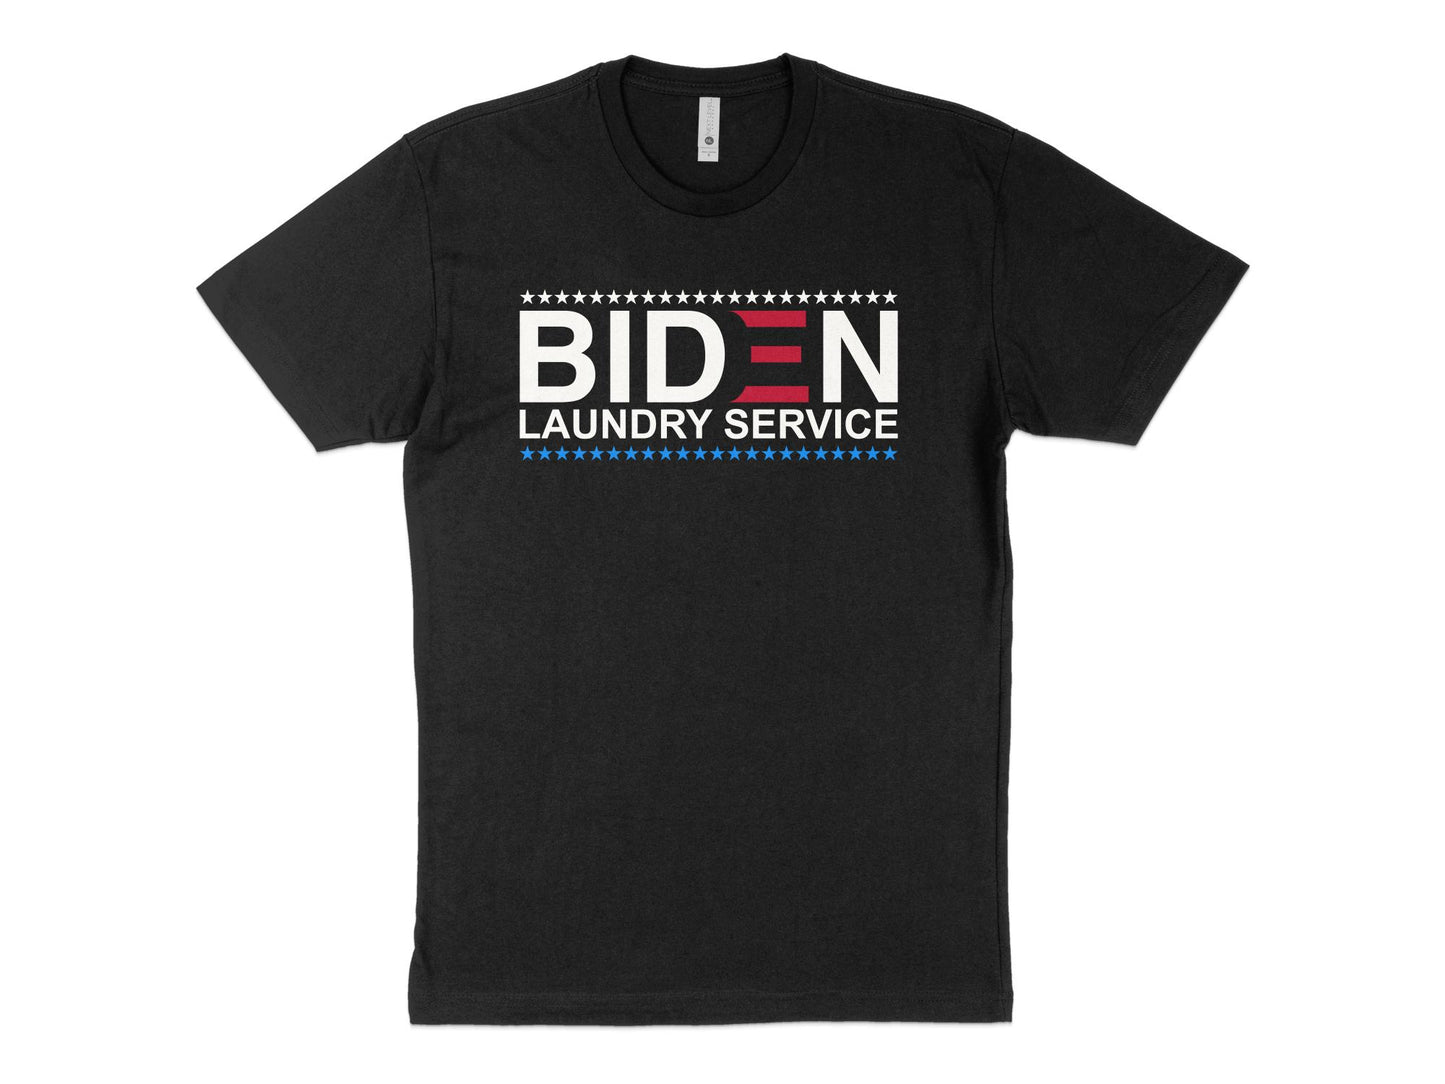 Joe Biden Shirt - Laundry Service, black